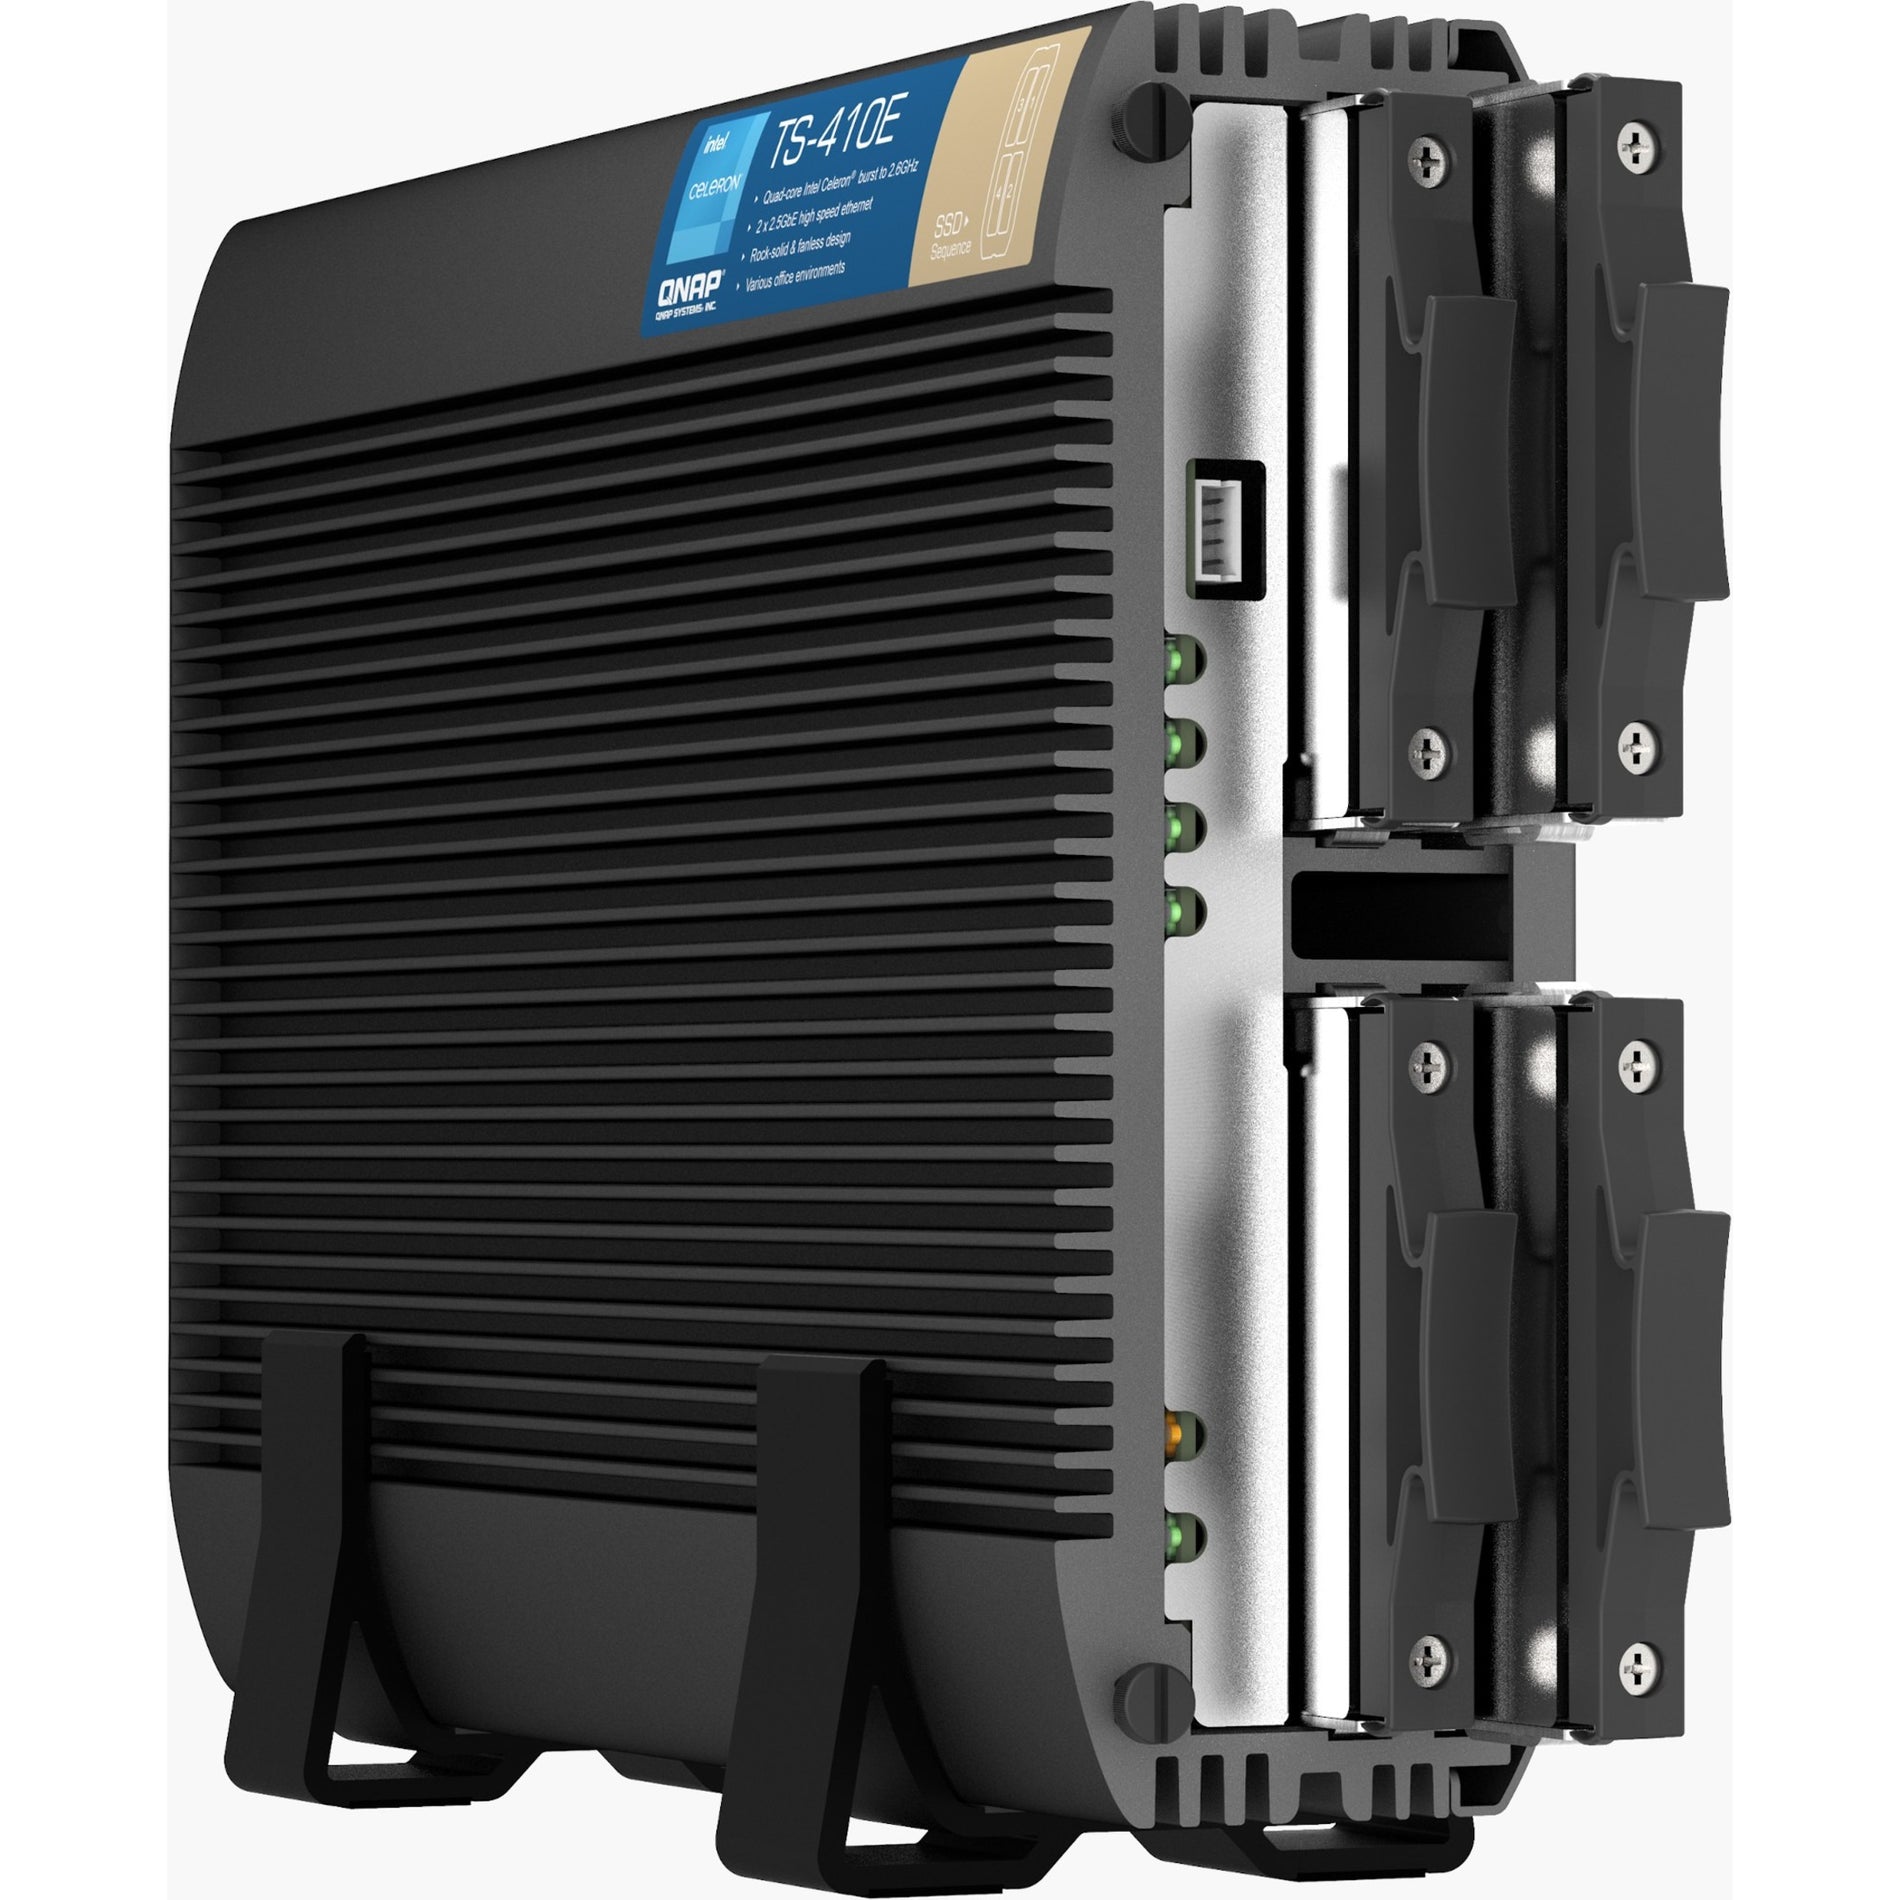 QNAP TS-410E-8G-US TS-410E-8G SAN/NAS Storage System, 8GB Memory, 4-Bay, QTS 5.0.0, 3-Year Warranty